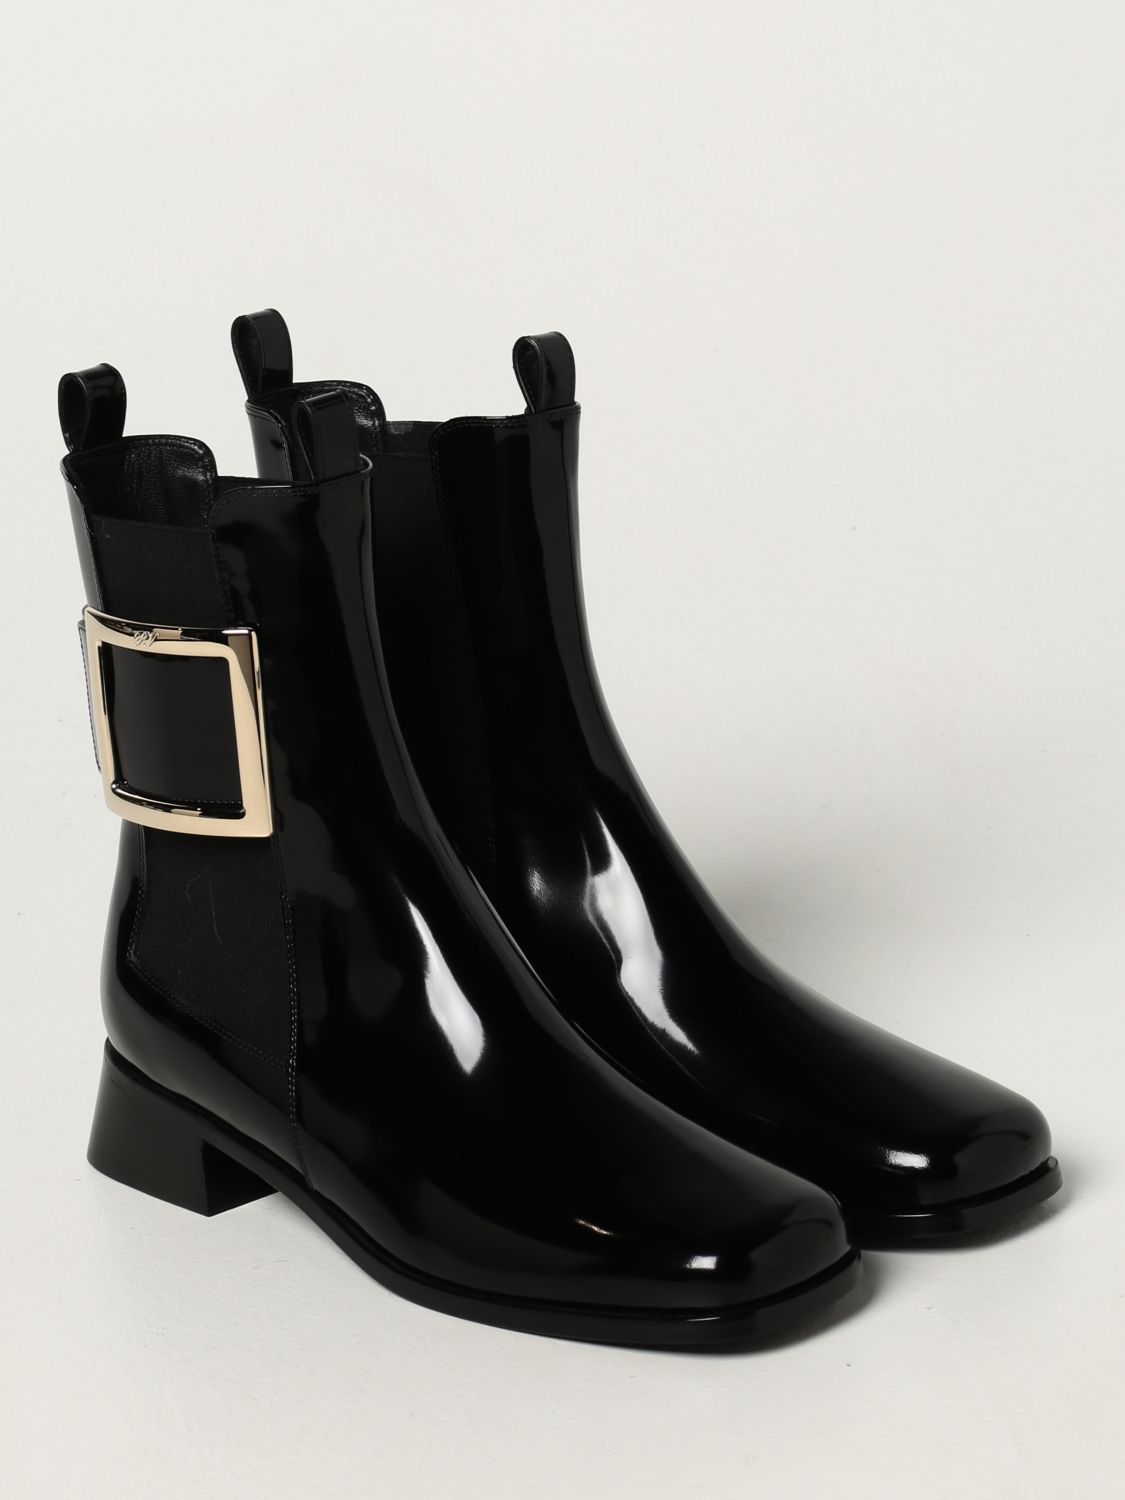 Très Vivier Roger Vivier ankle boots in leather